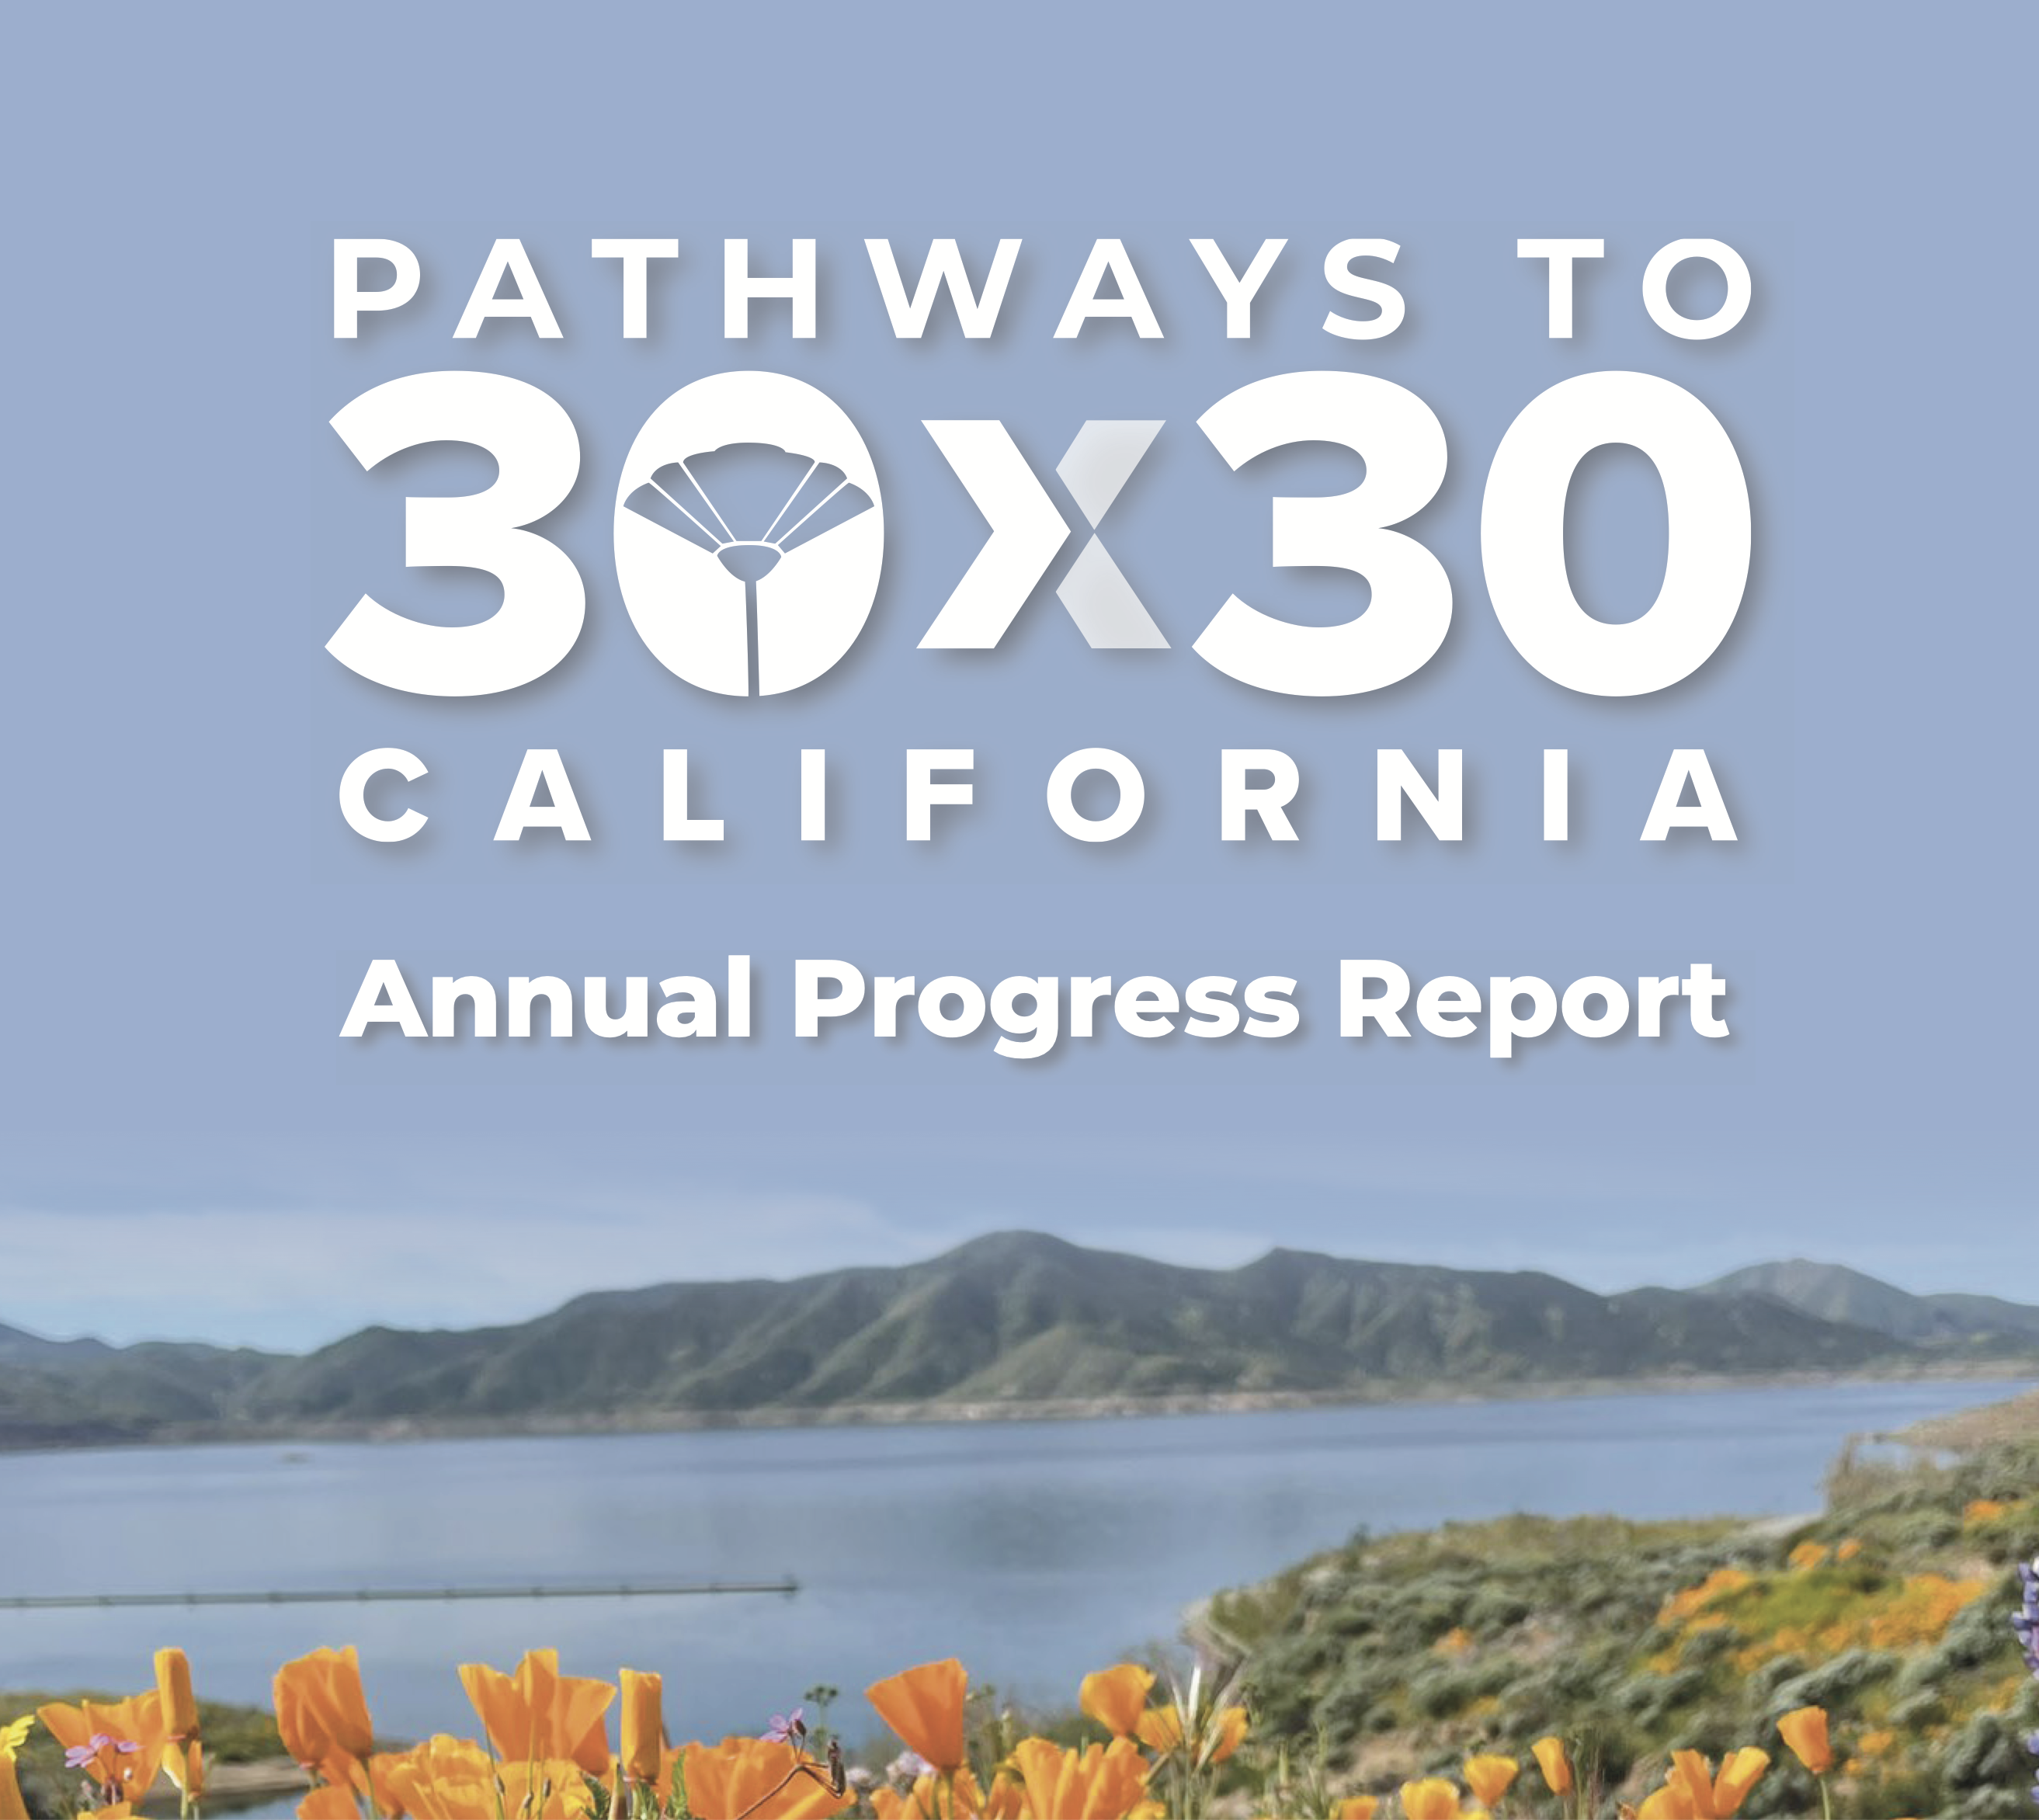 Pathways to 30x30 California Annual Progress Report Cover